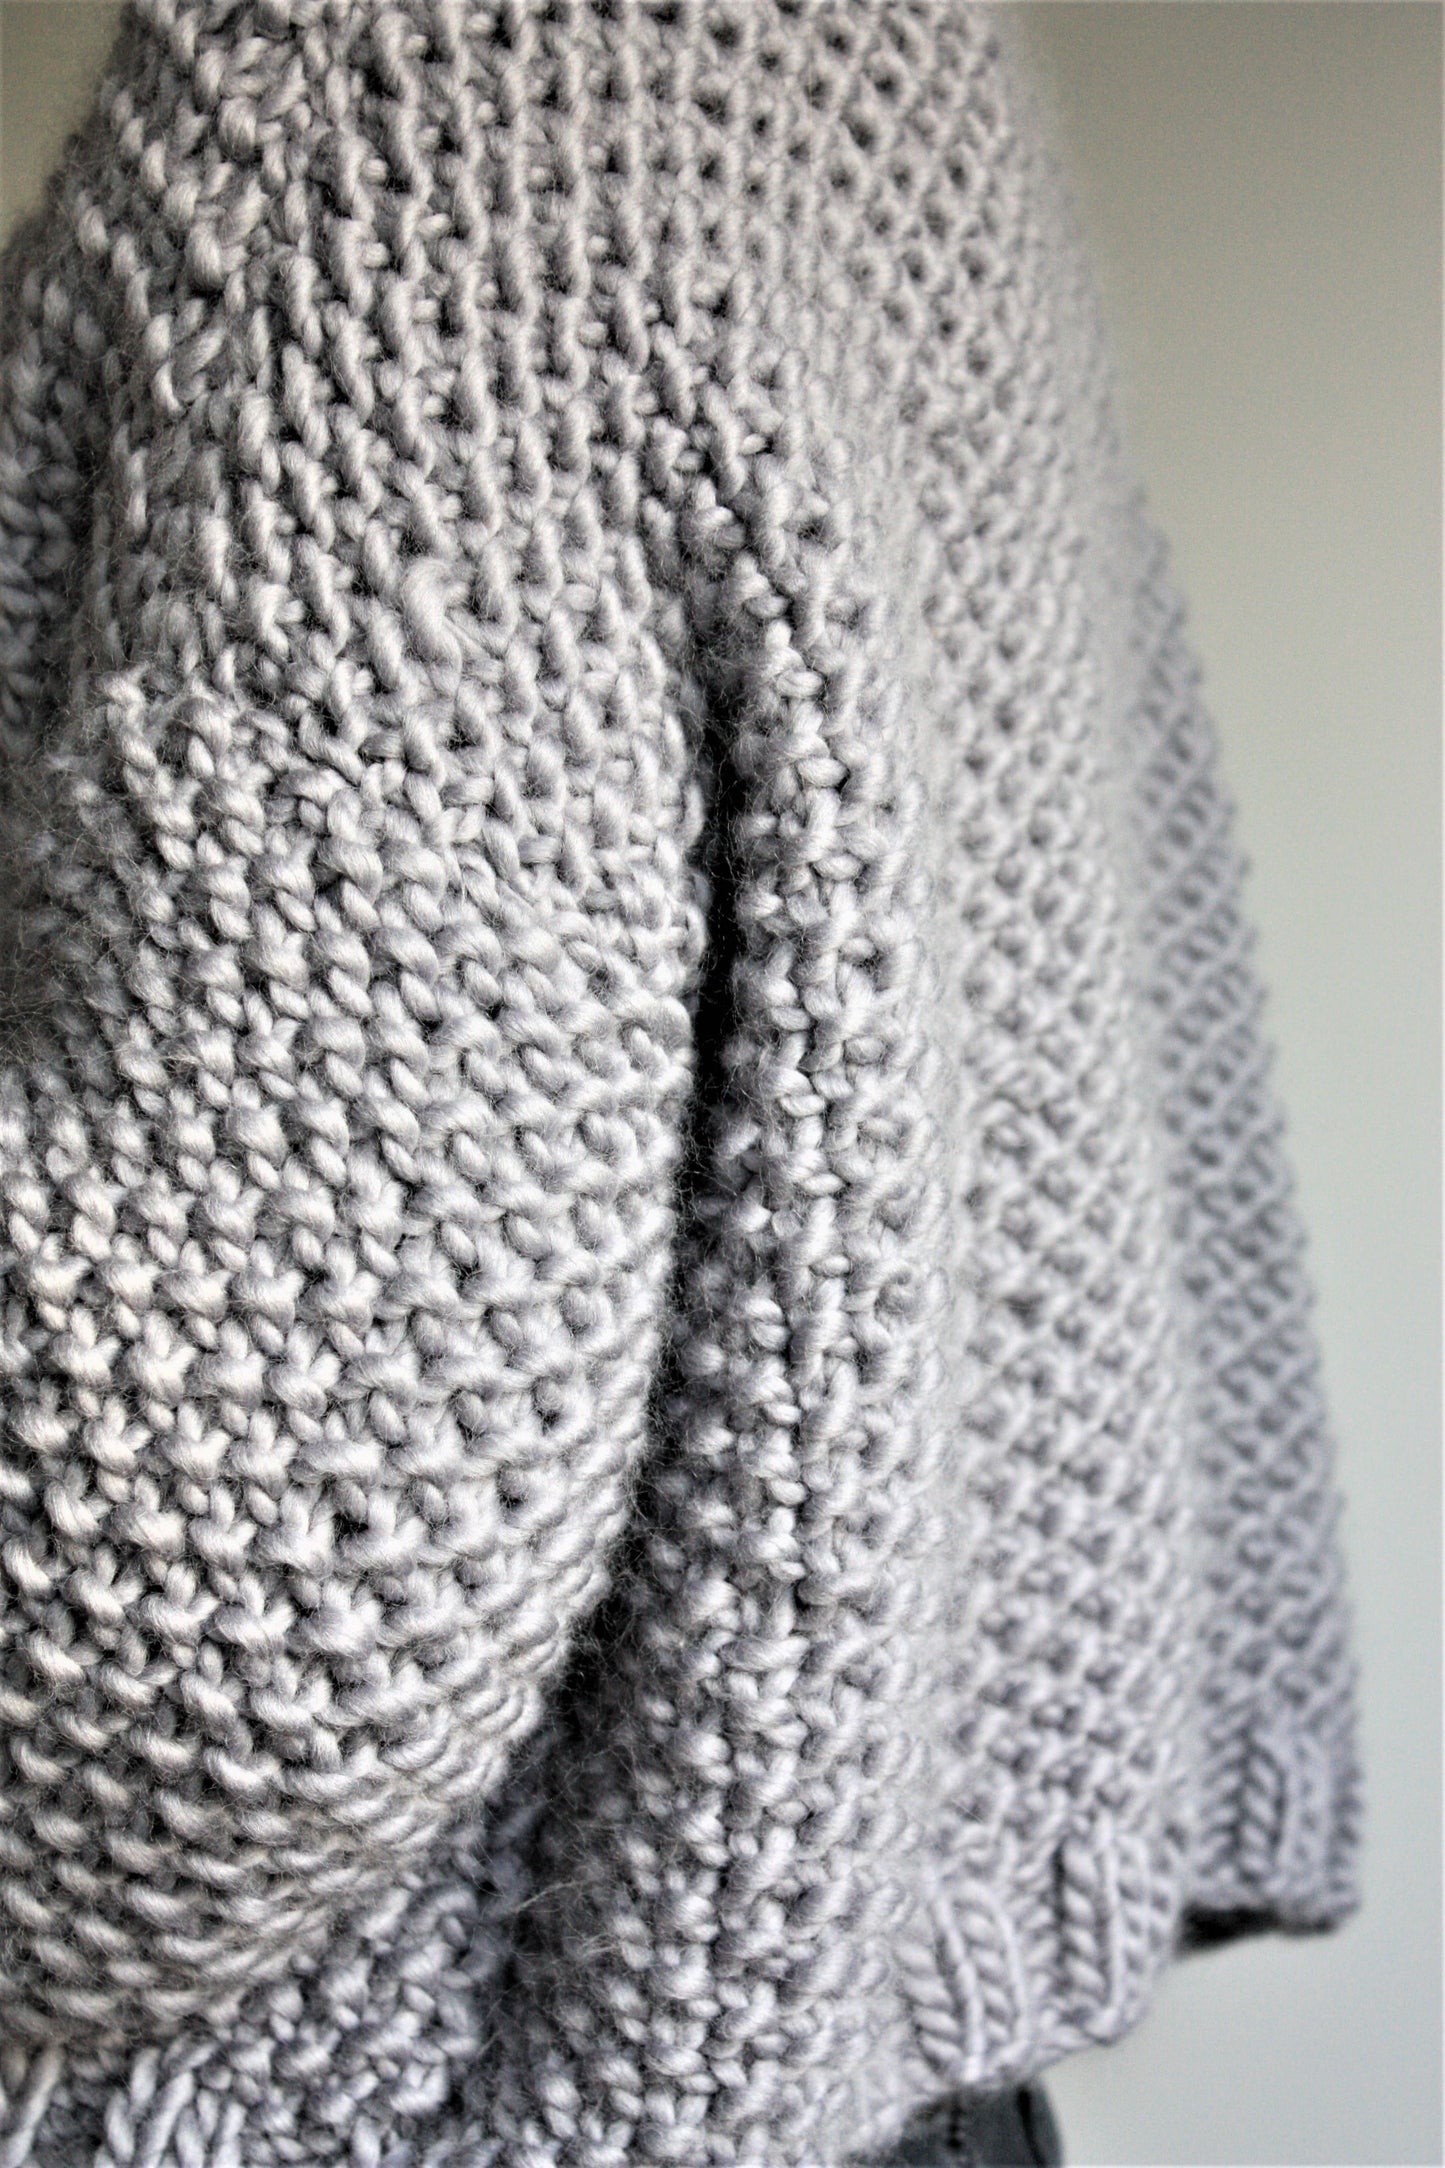 Easy Knitting Pattern - Chunky Knit Moss Stitch Cropped Cardigan | Mosscrop Cardigan - King & Eye